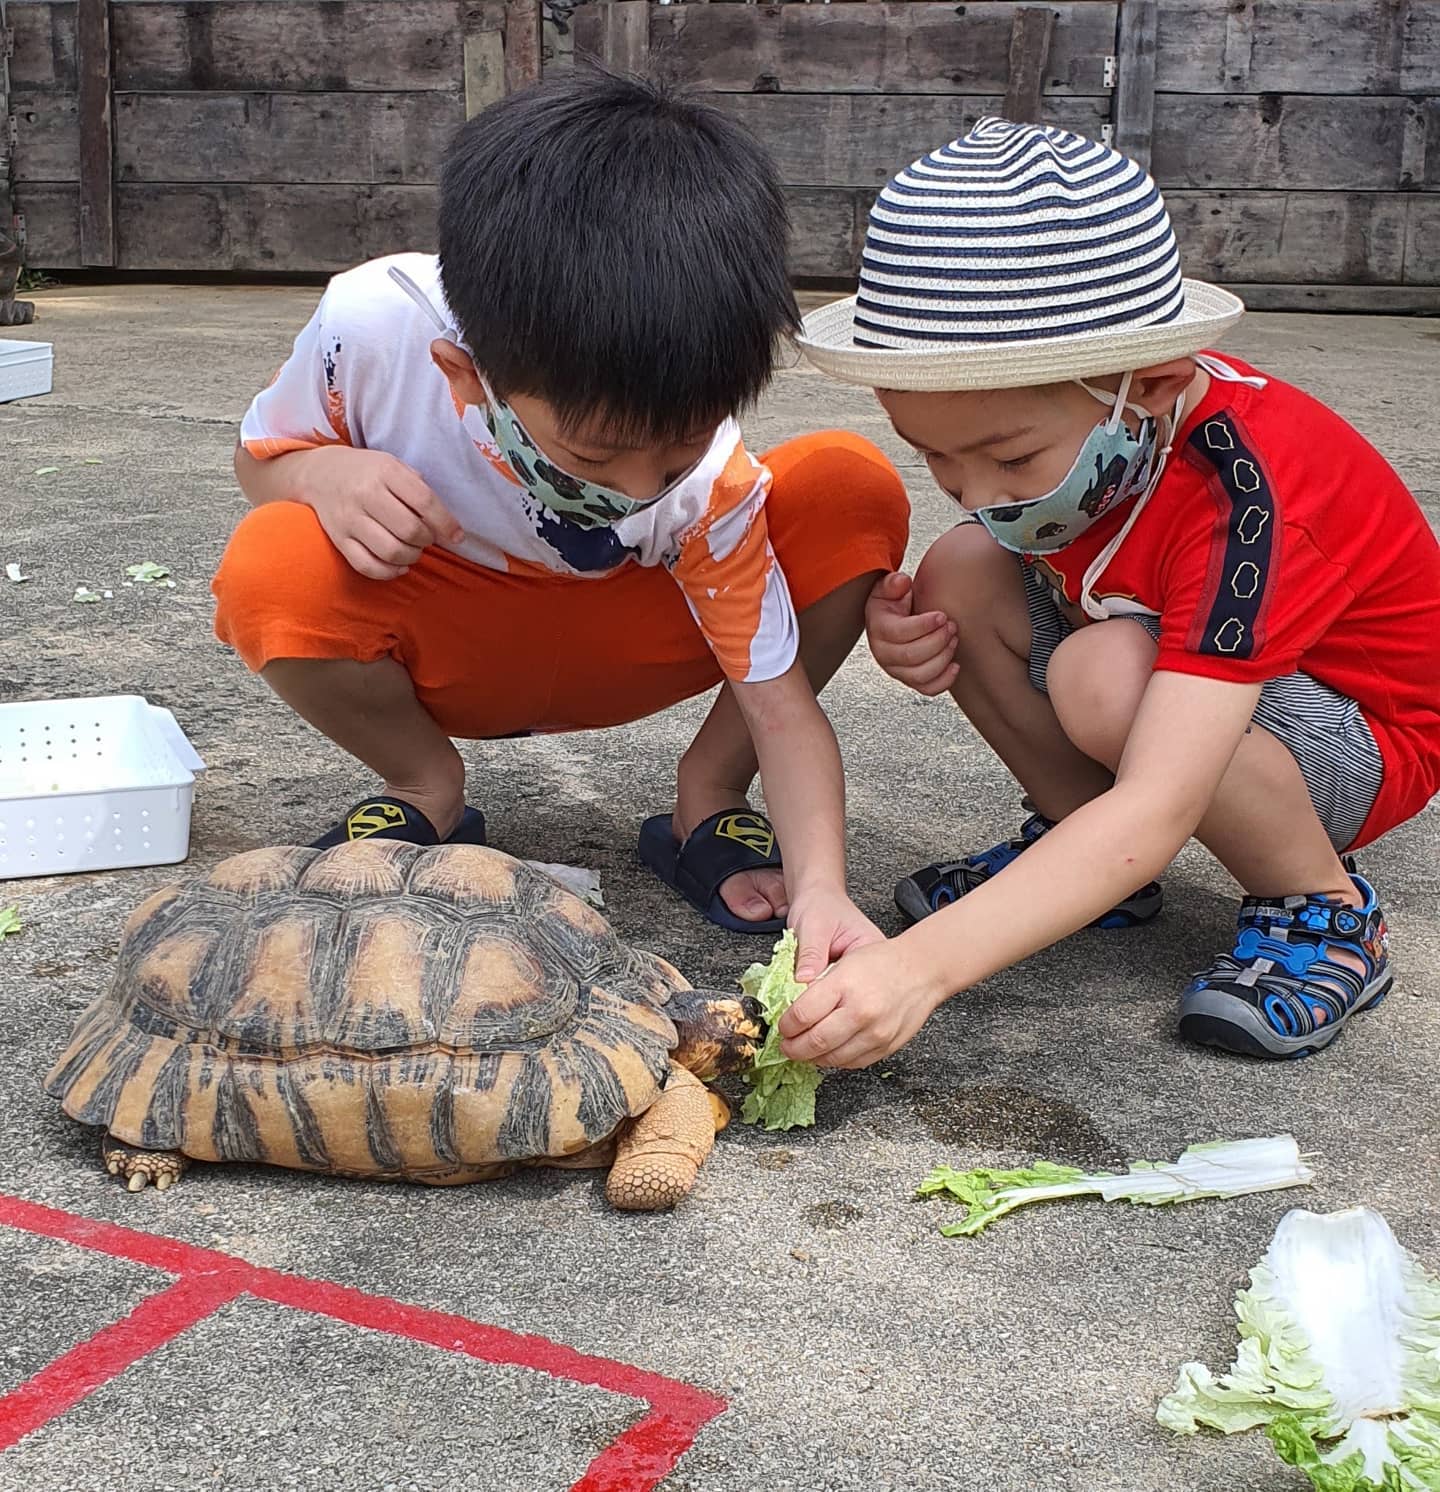 live turtle & tortoise museum - fun for kids